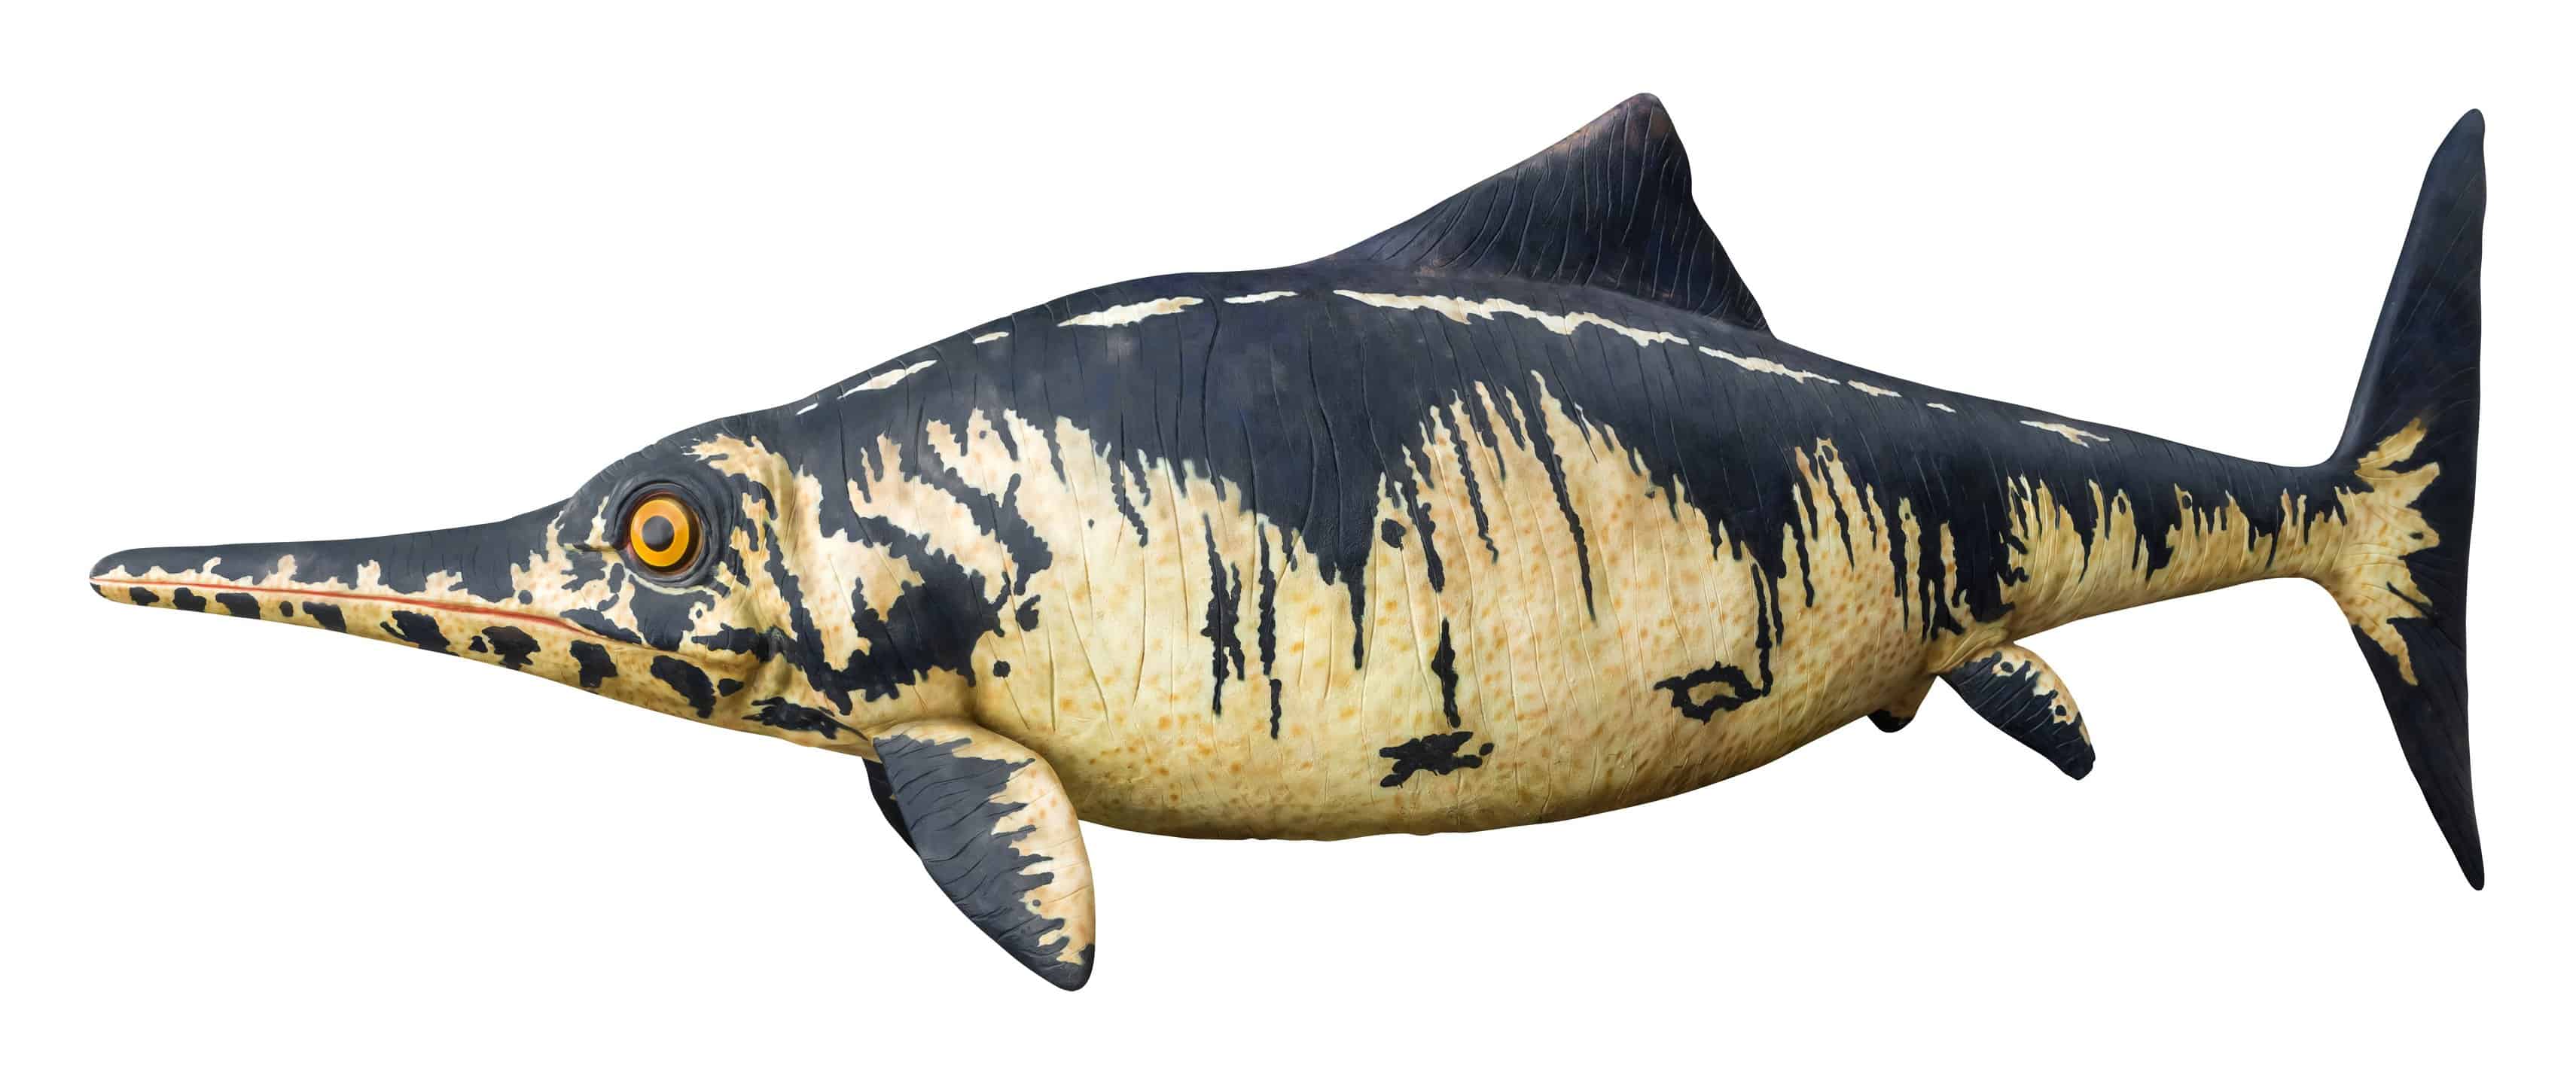 ichthyosaur - fish lizard swordfish